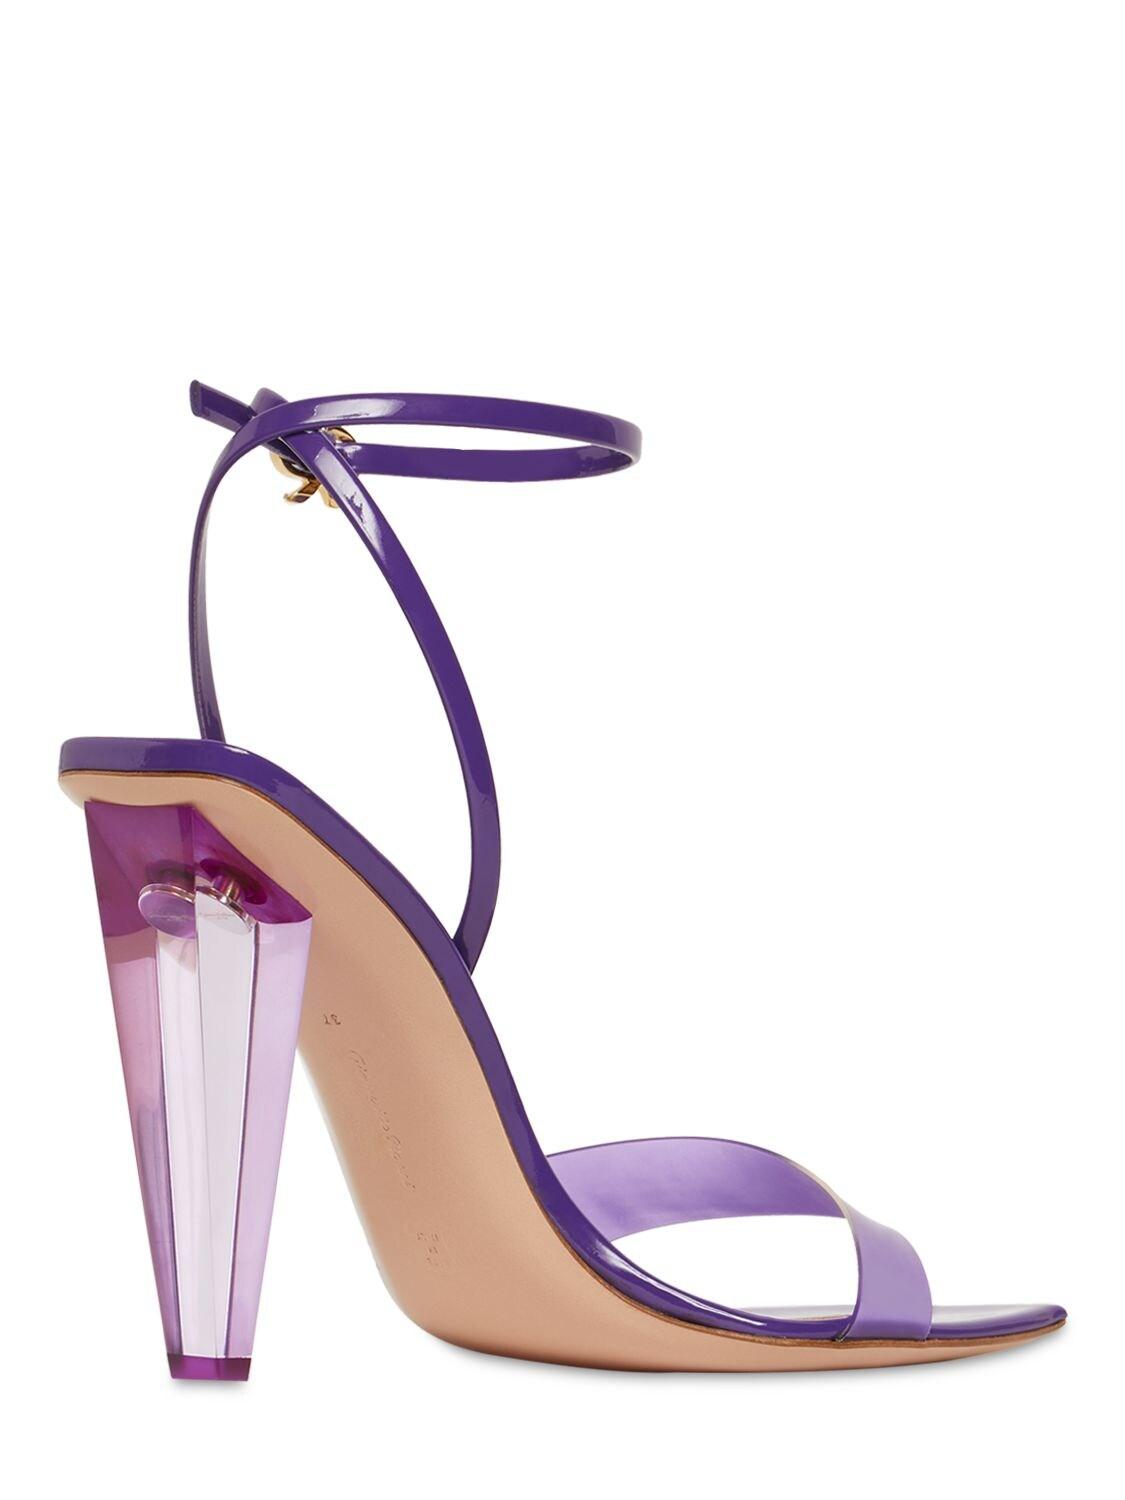 Gianvito Rossi 105mm Odyssey Plexi & Patent Sandals in Violet 